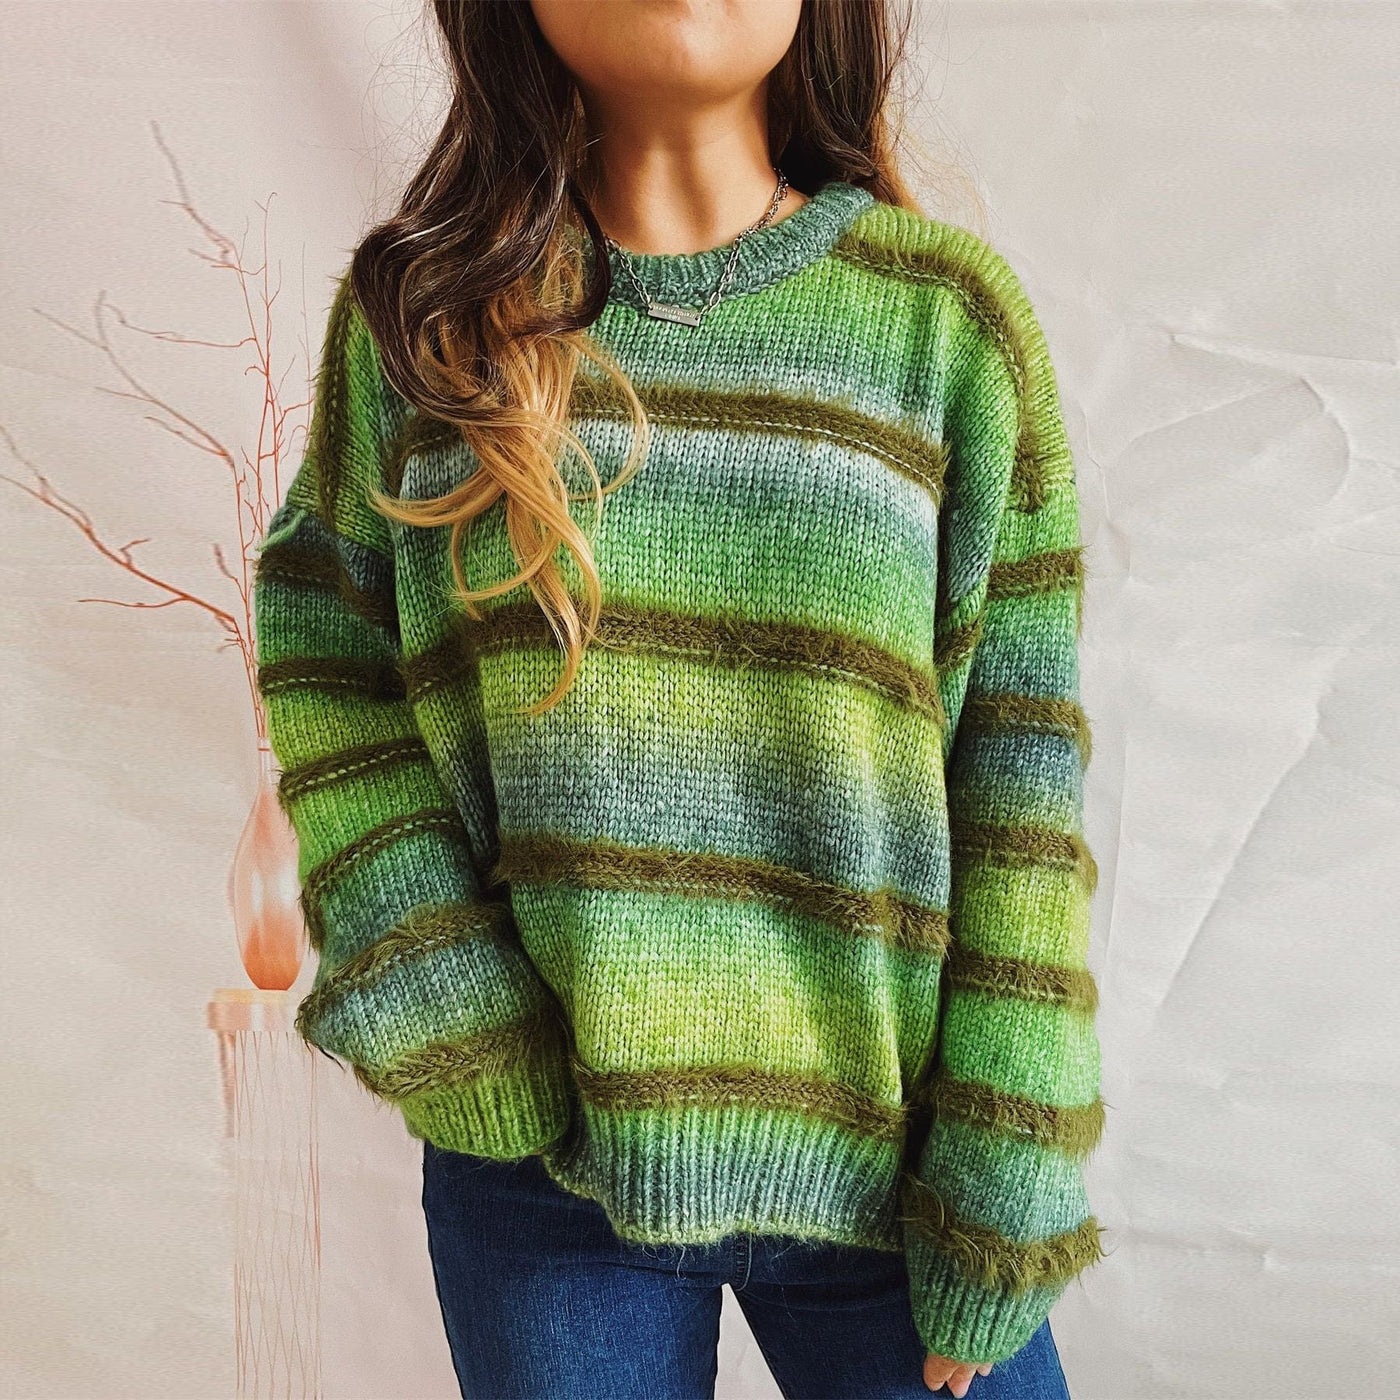 WindMind S / Green Gradient Striped Sweater